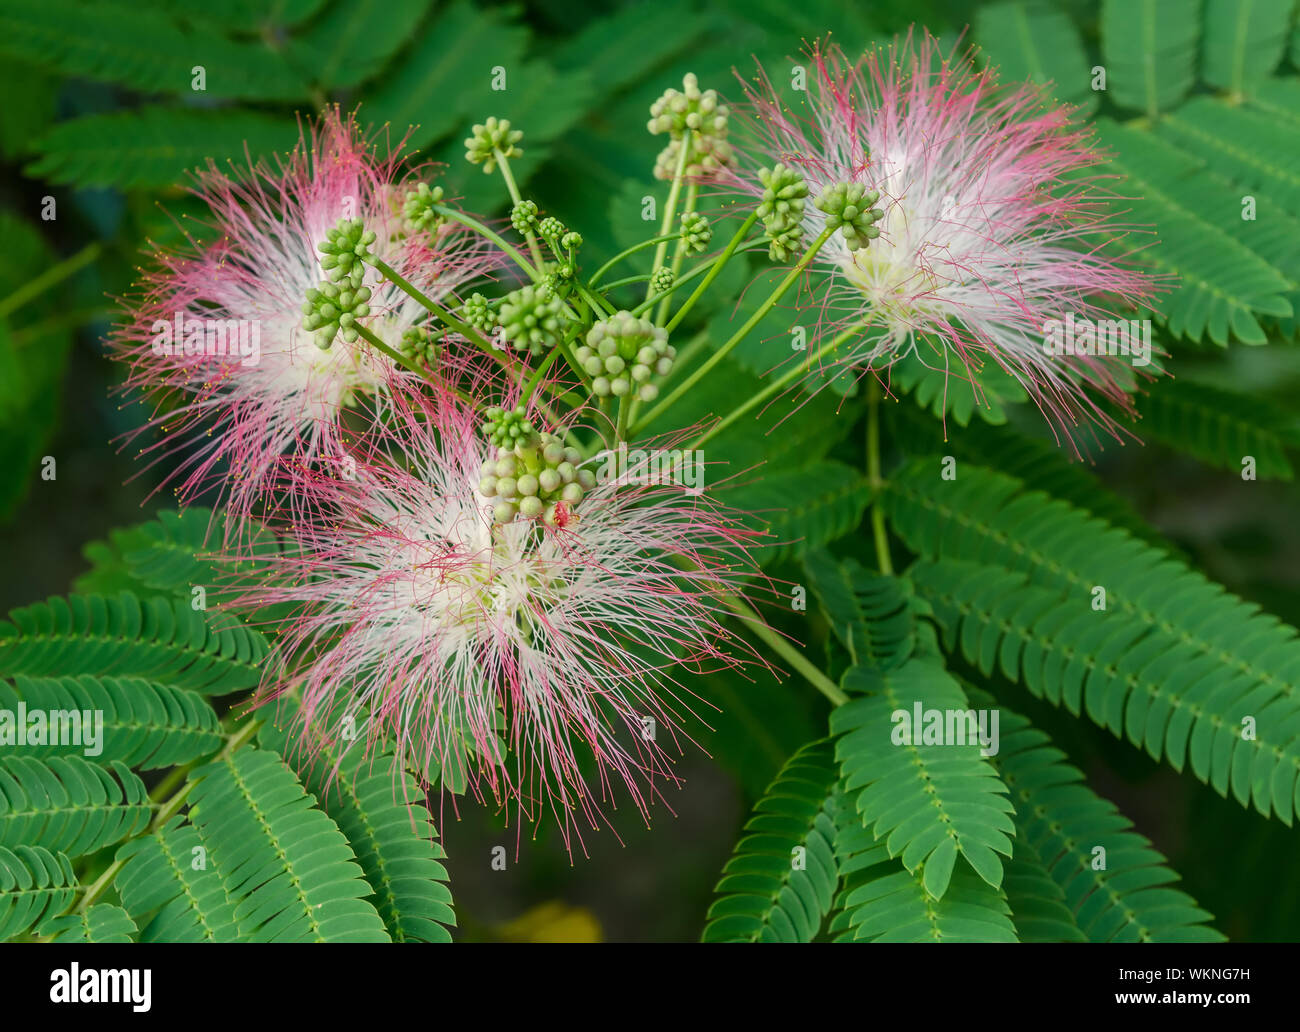 Closeup of Persian Silk Tree (Albizia julibrissin) or Pink Siris Flowers Foliage and Immature Fruits, Horizontal Day shot, Shallow Focus Stock Photo